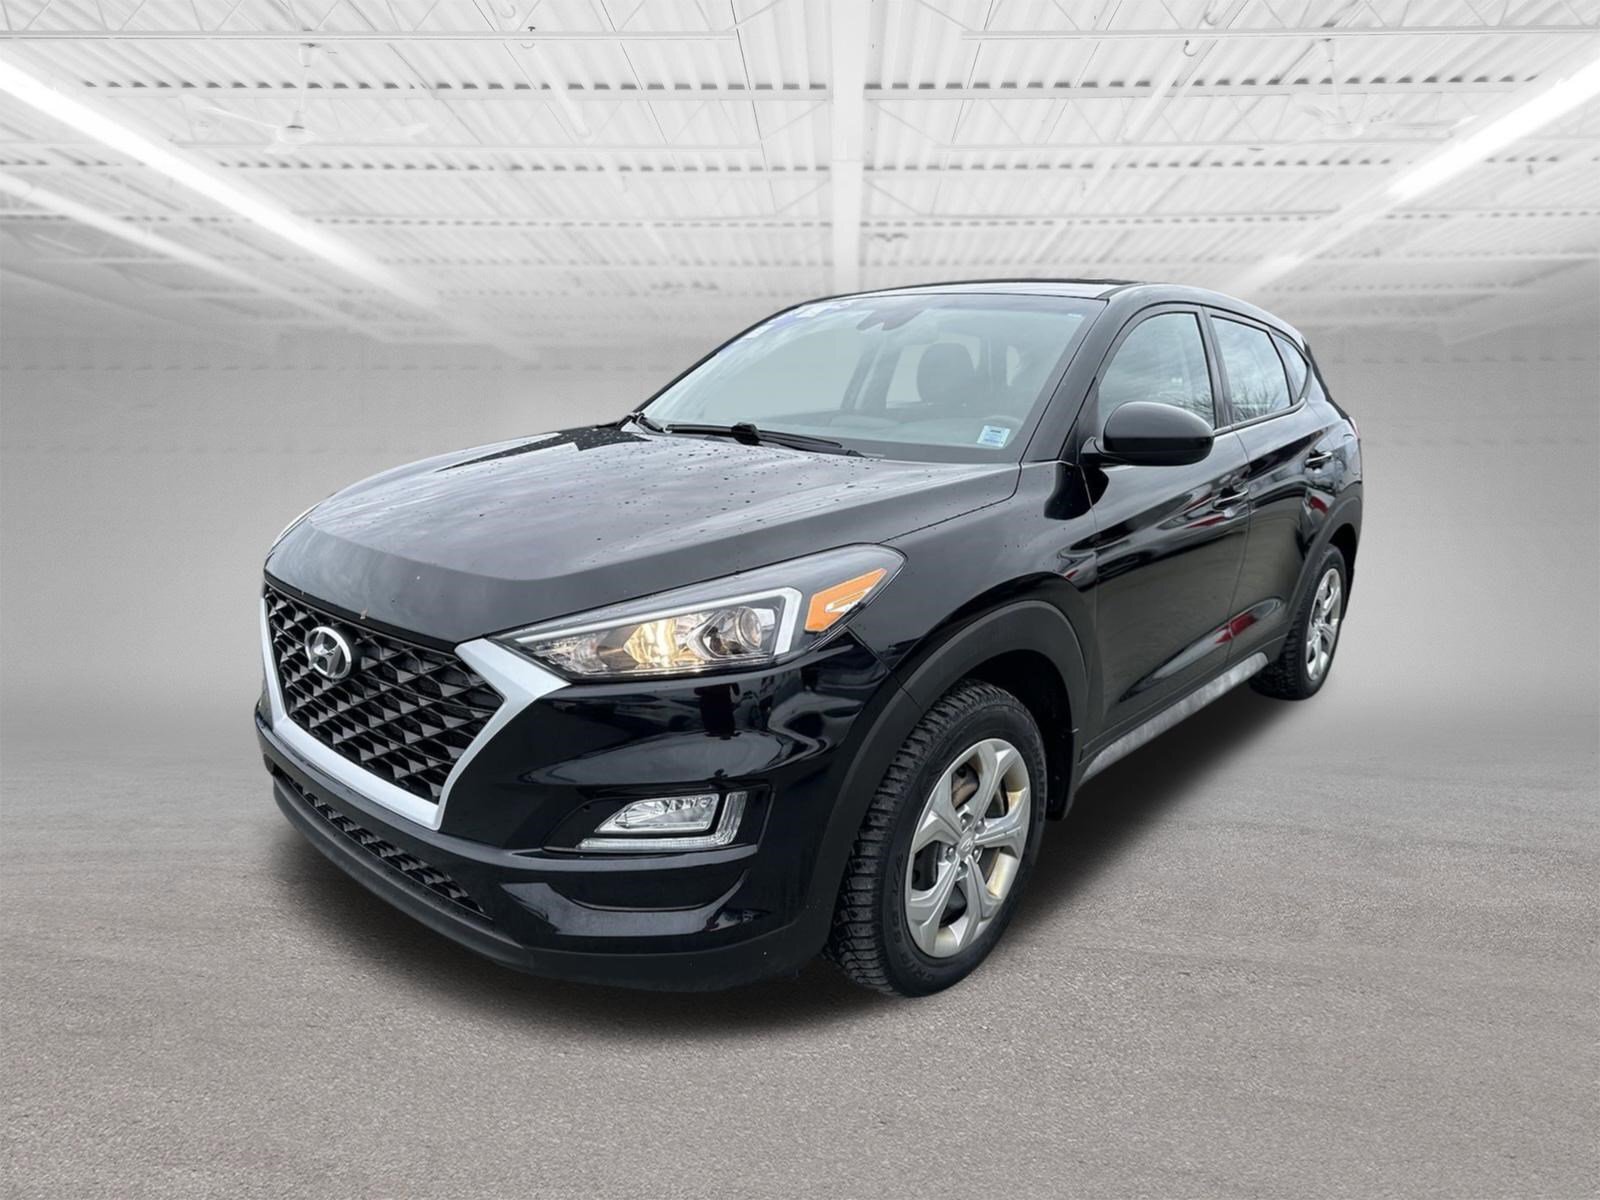 2019 Hyundai Tucson Safety Package